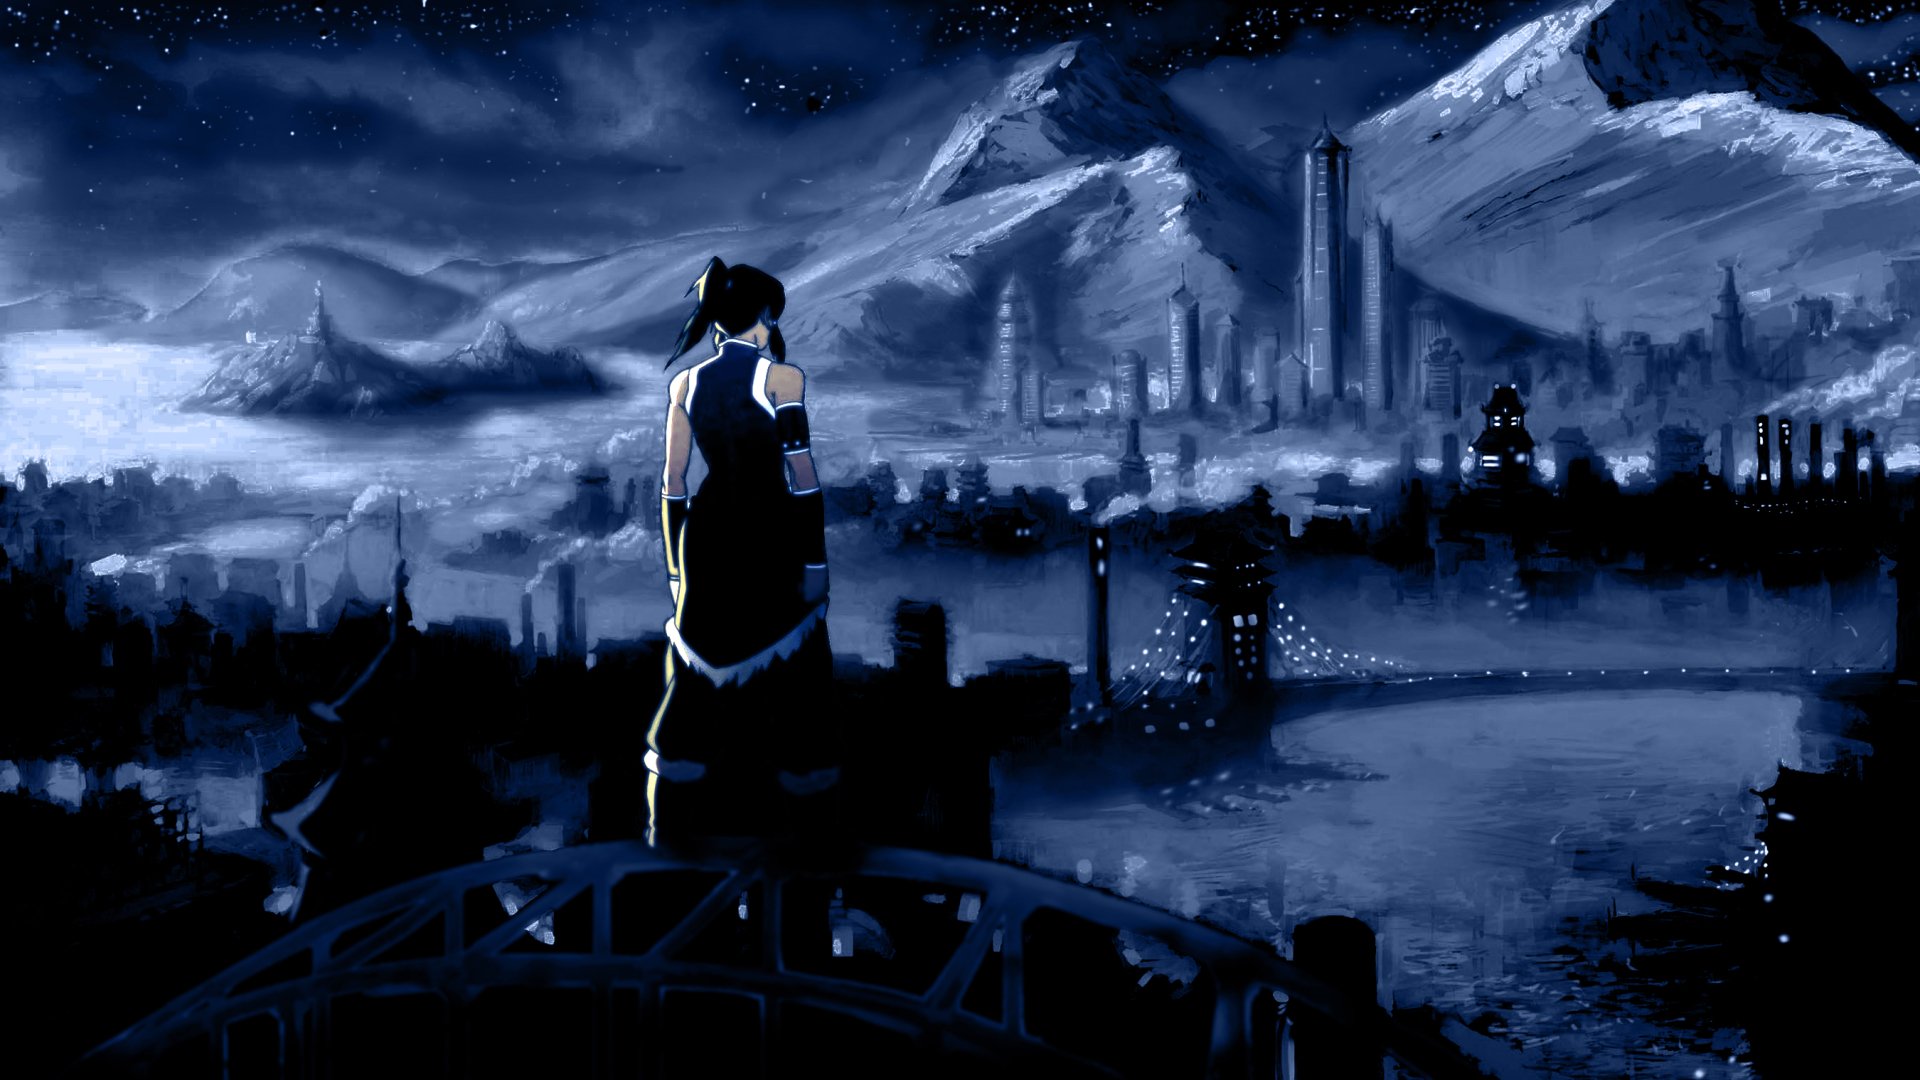 the legend of korra wallpaper,darkness,cg artwork,sky,action adventure game,midnight